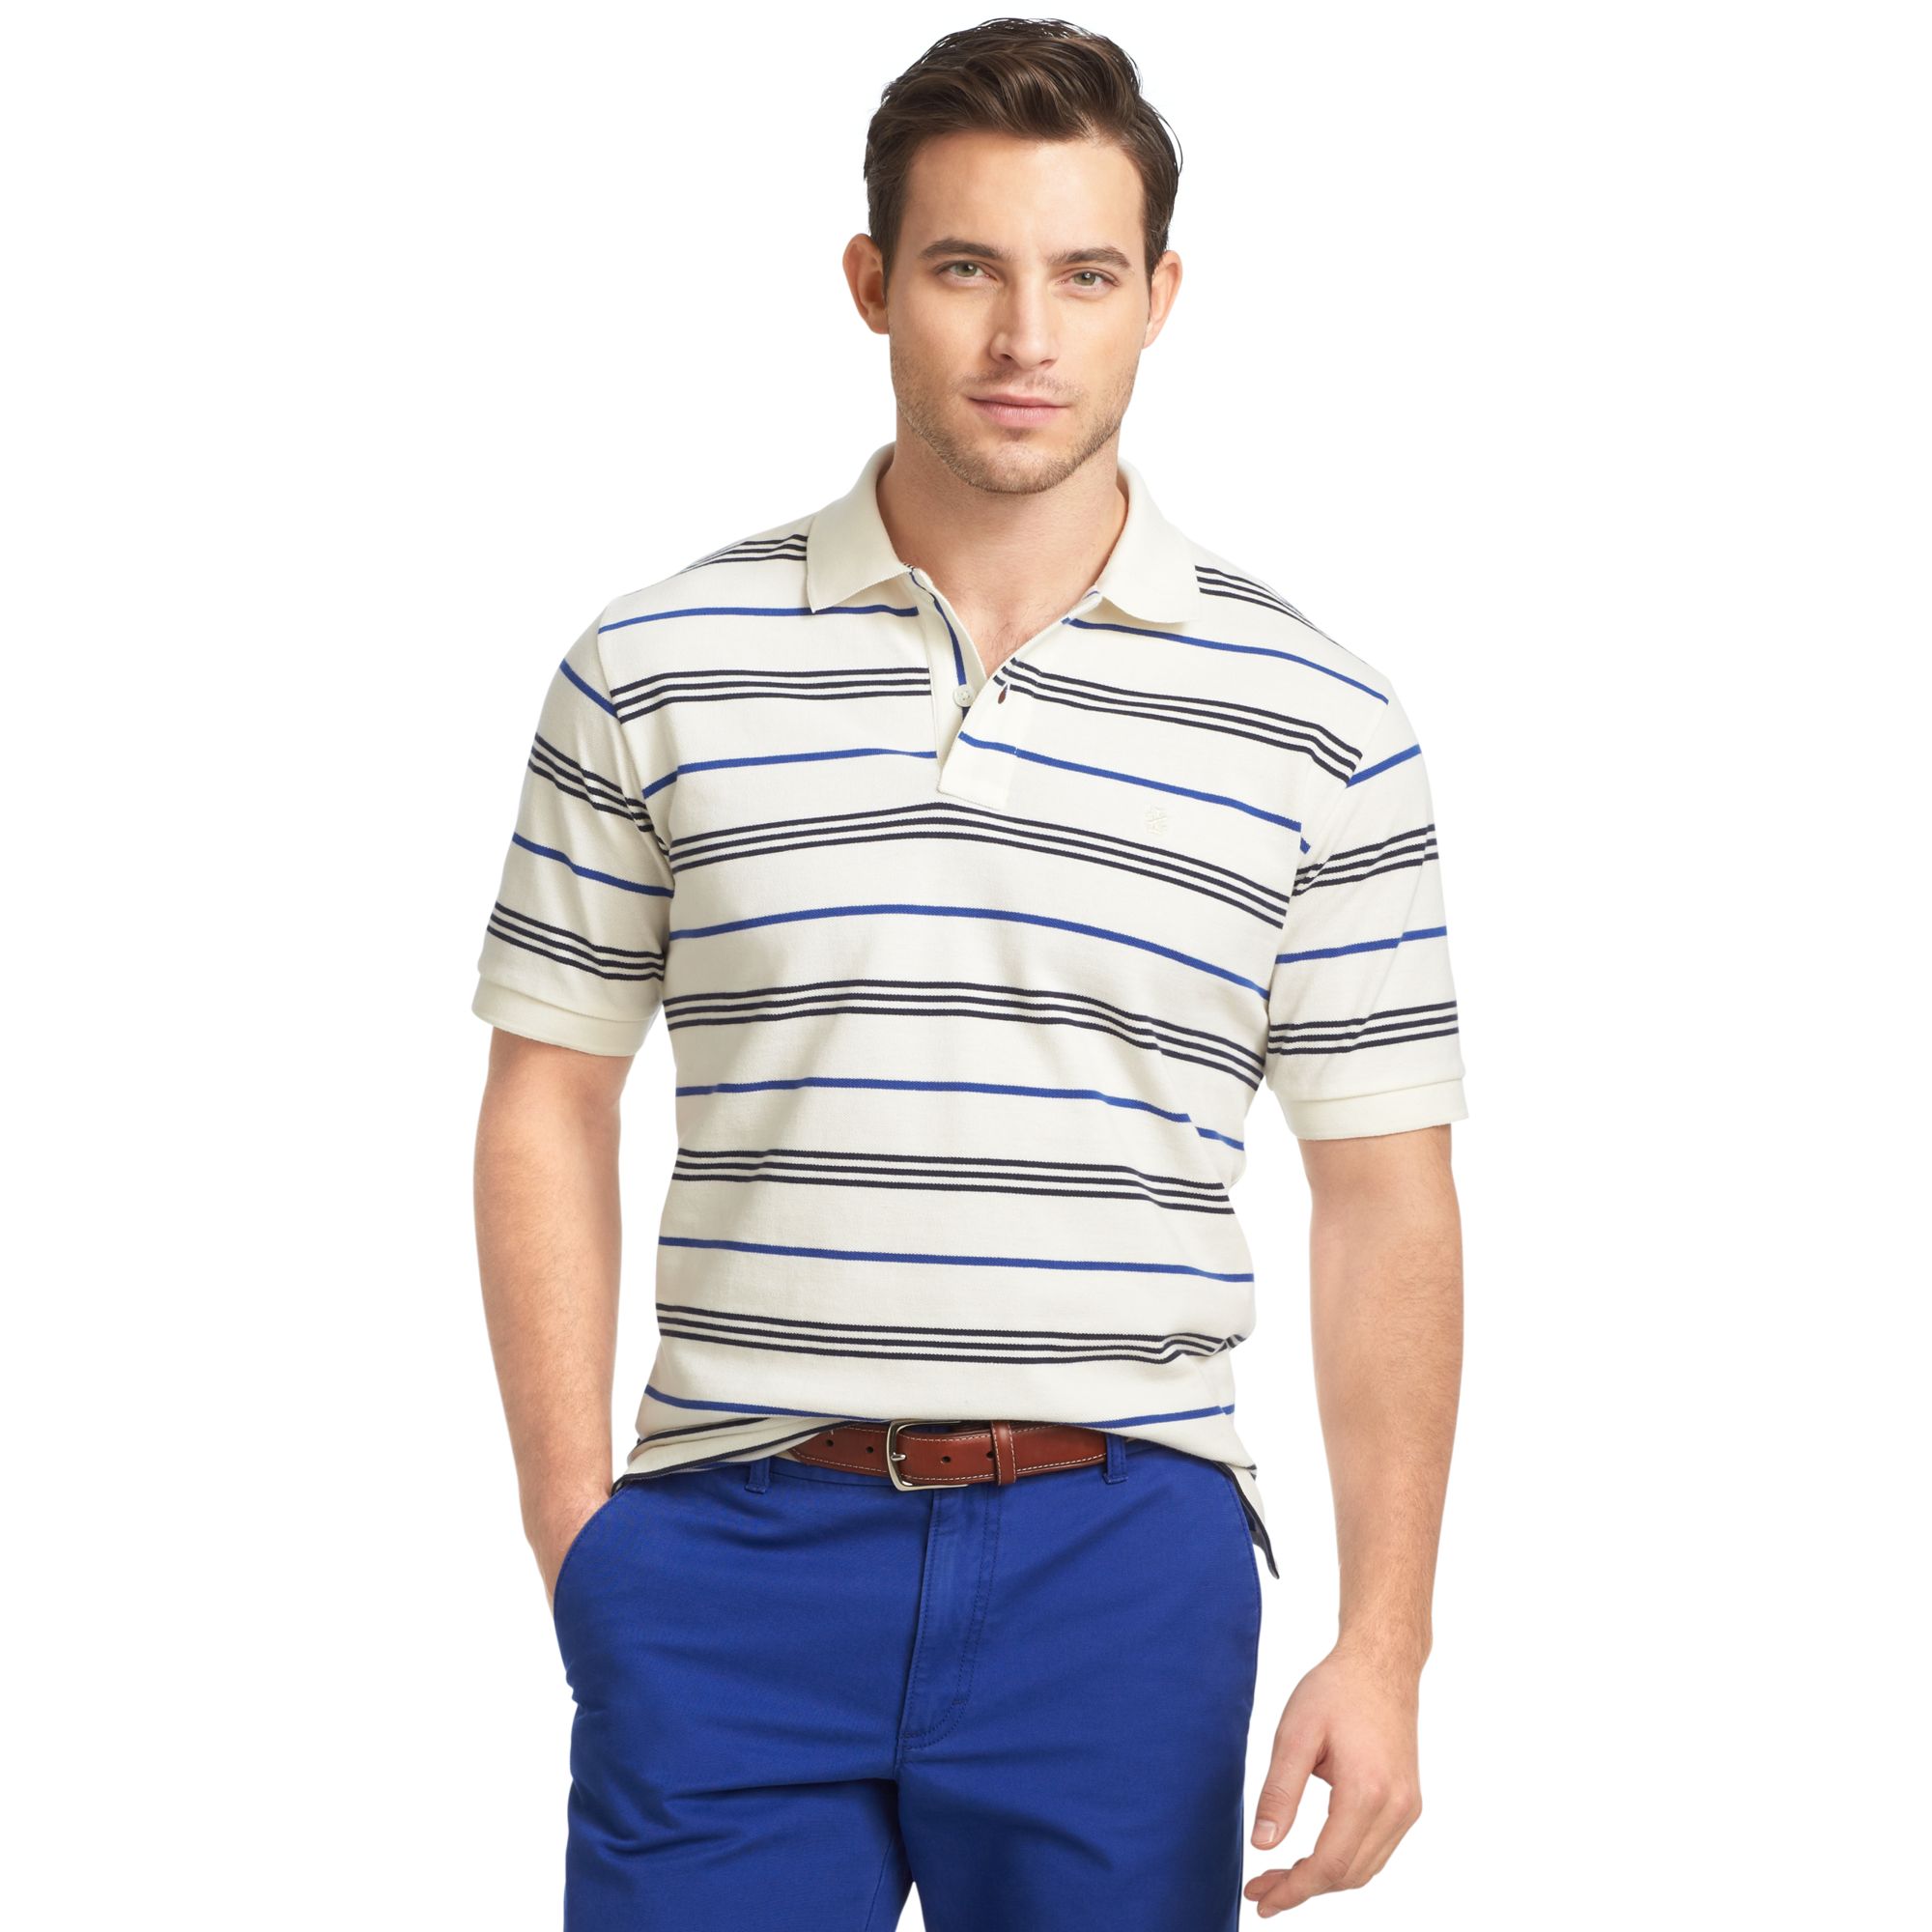 Lyst - Izod Izod Shirt Short Sleeve Multi Striped Pique Polo for Men